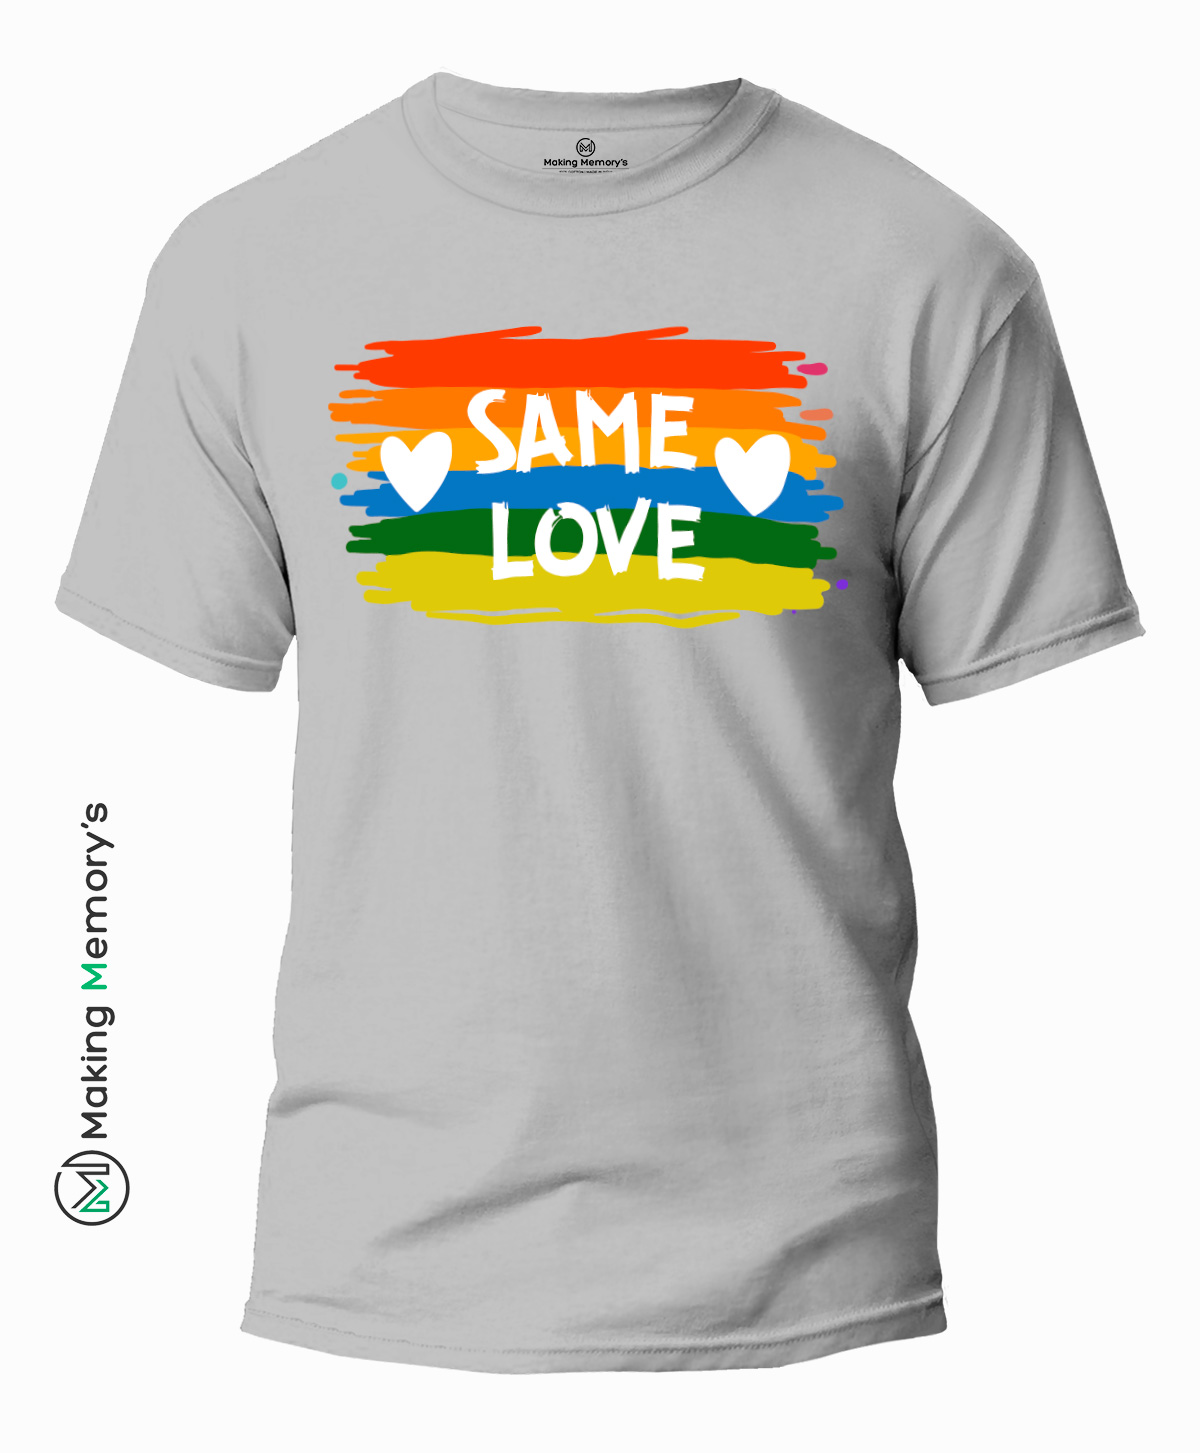 Same-Love-Gray-T-Shirt